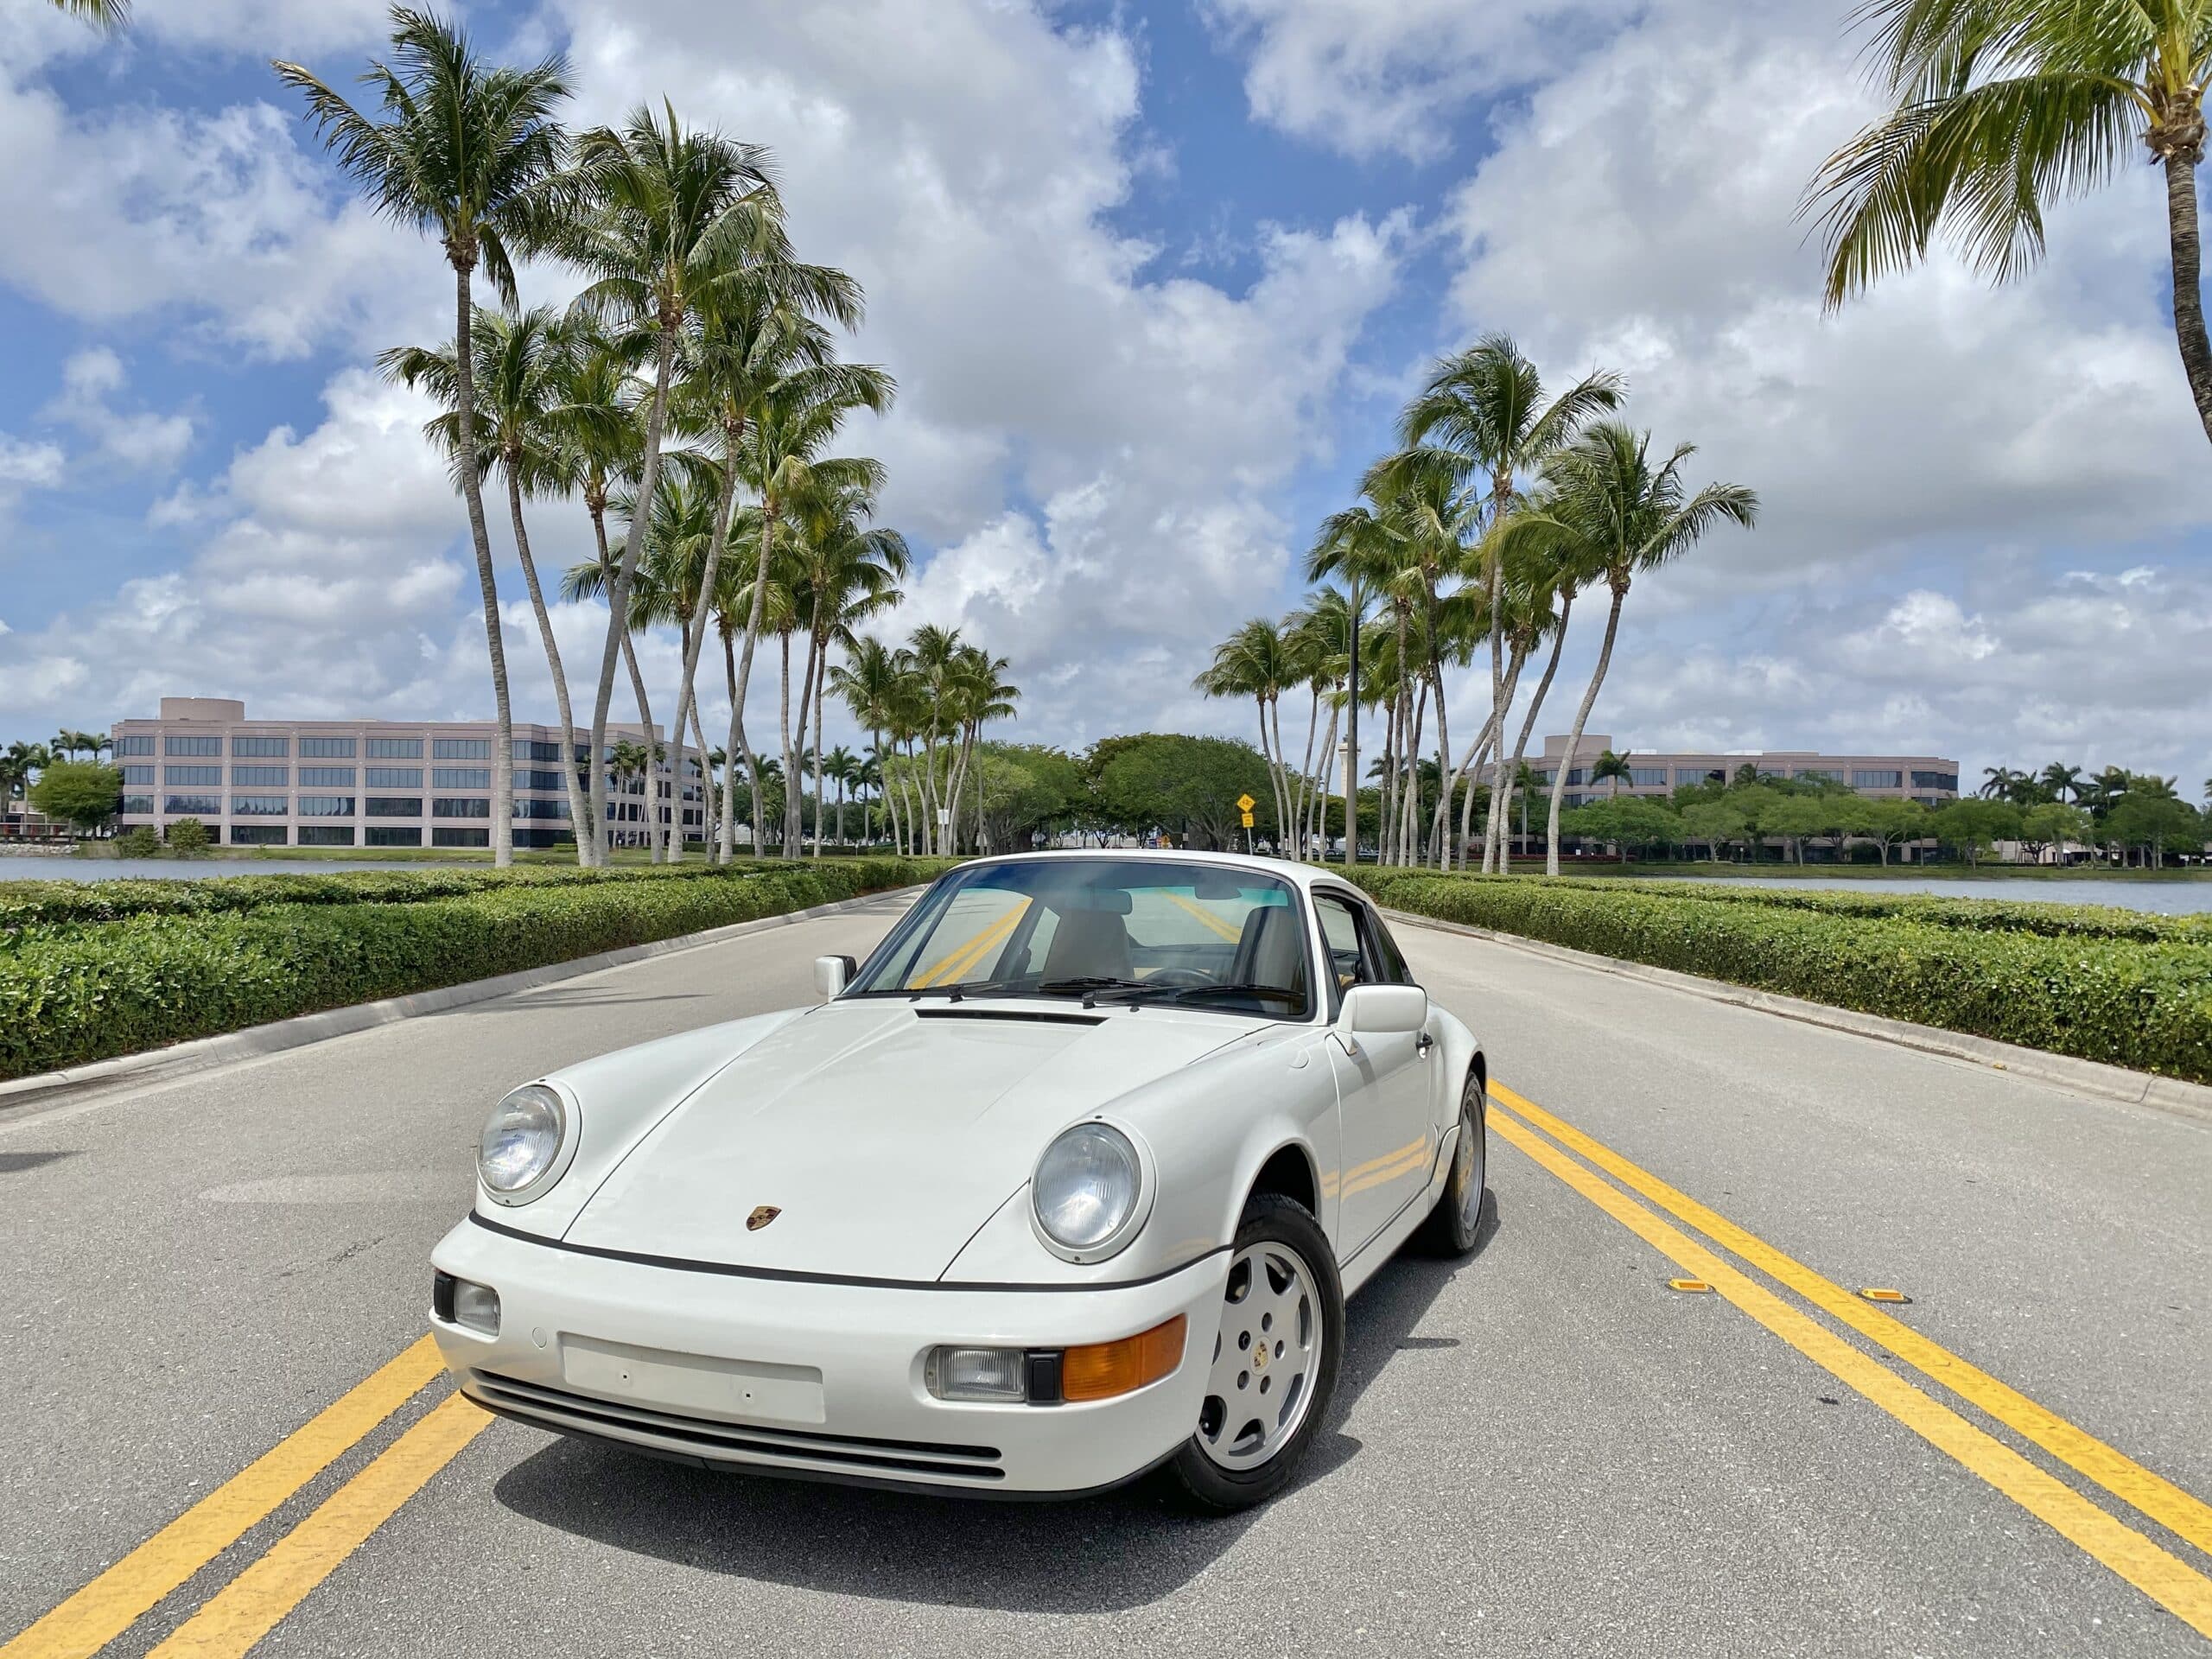 1990 Porsche 911 964 Carrera 2 GP White C2 / G50 5 Speed Manual / Texas Native / Service records /Clean history